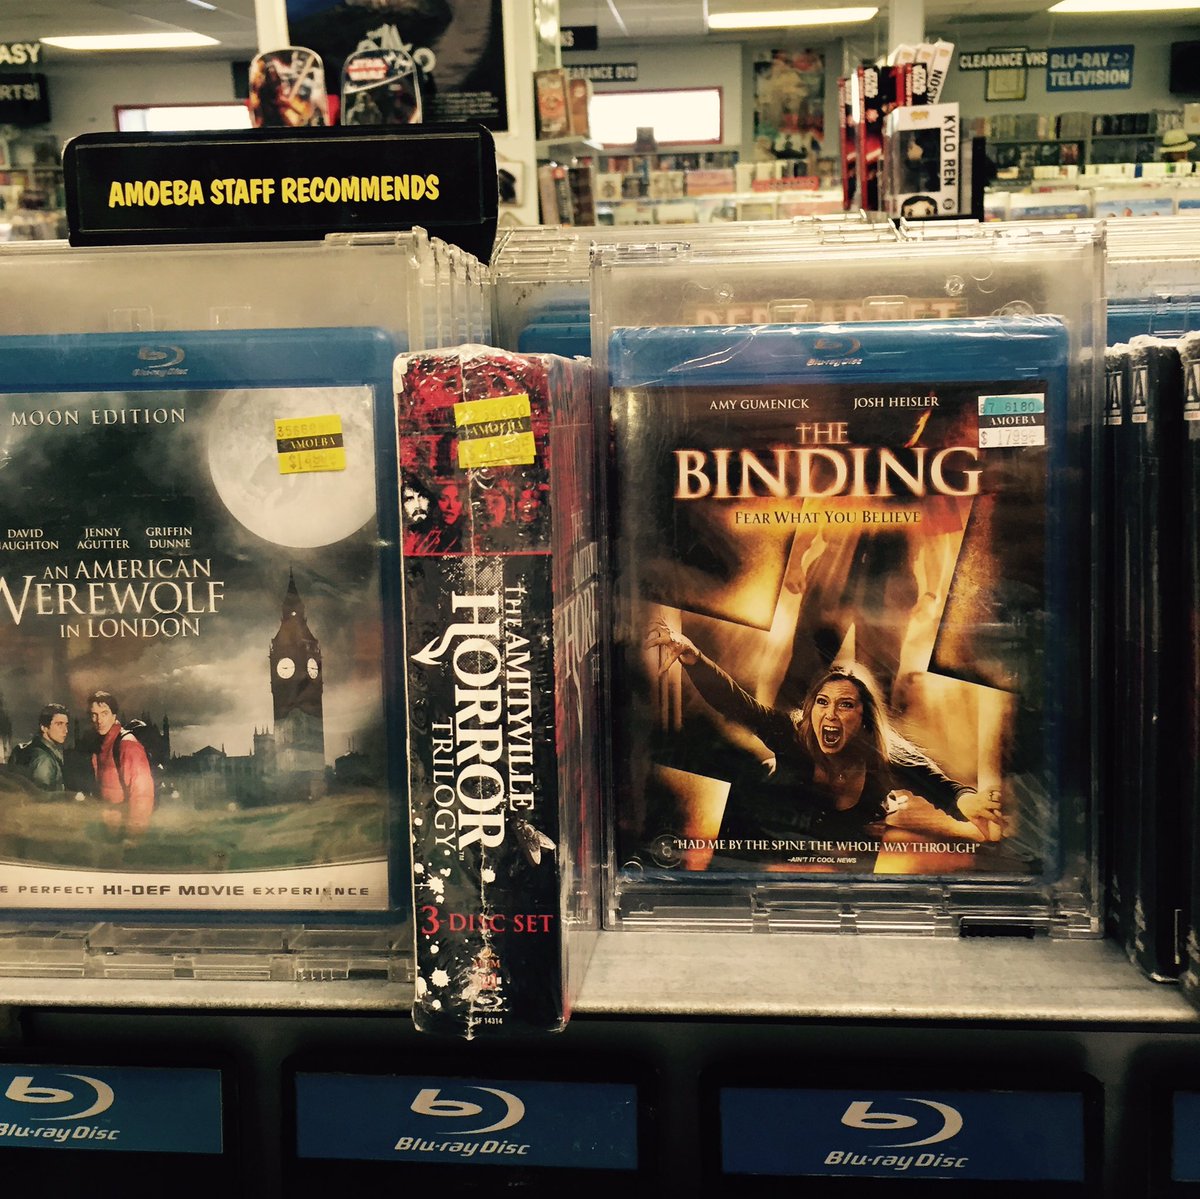 #TheBinding on shelves at Amoeba Music in #Hollywood #California!
#hoorayforhollywood #film